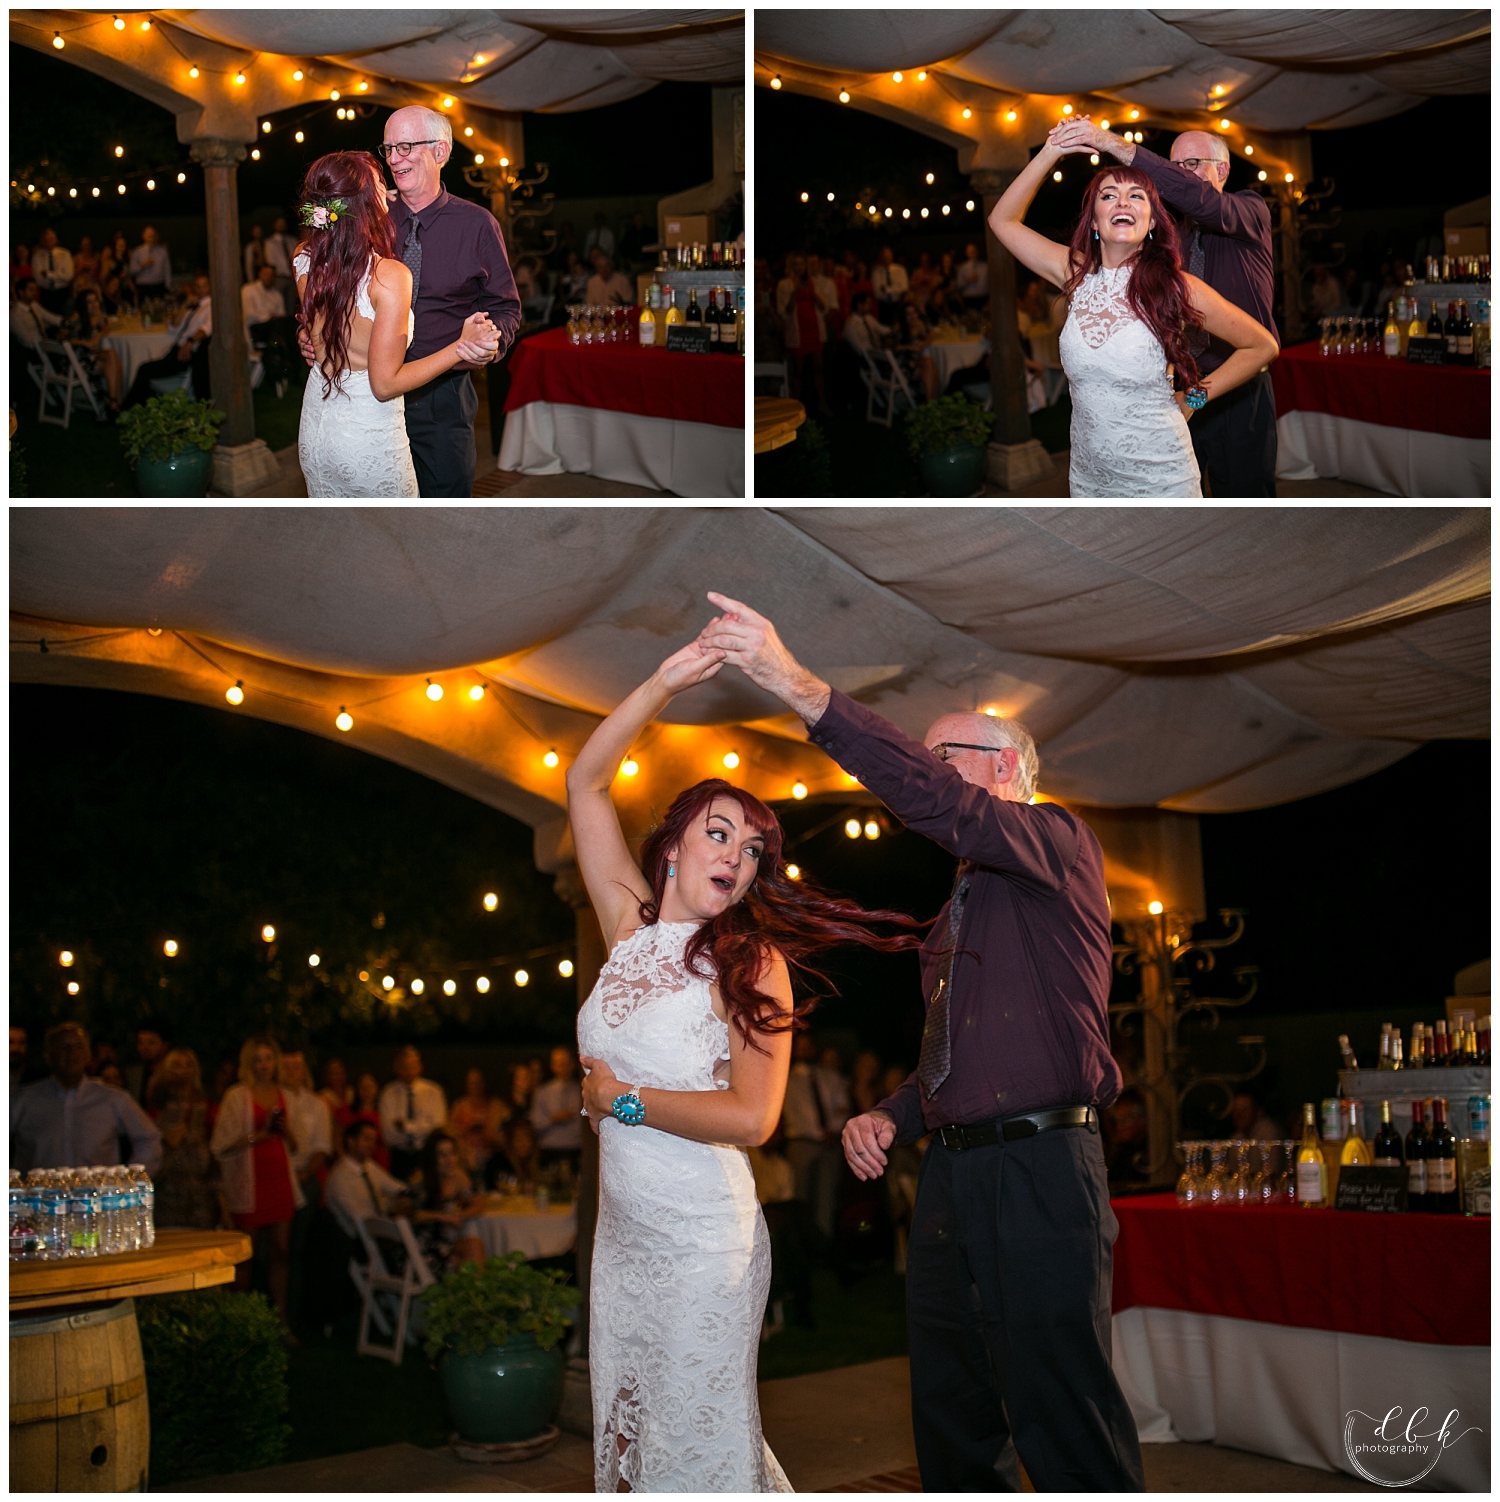 father-daughter dance on patio at Casa Rondena Winery wedding reception in Albuquerque, New Mexico